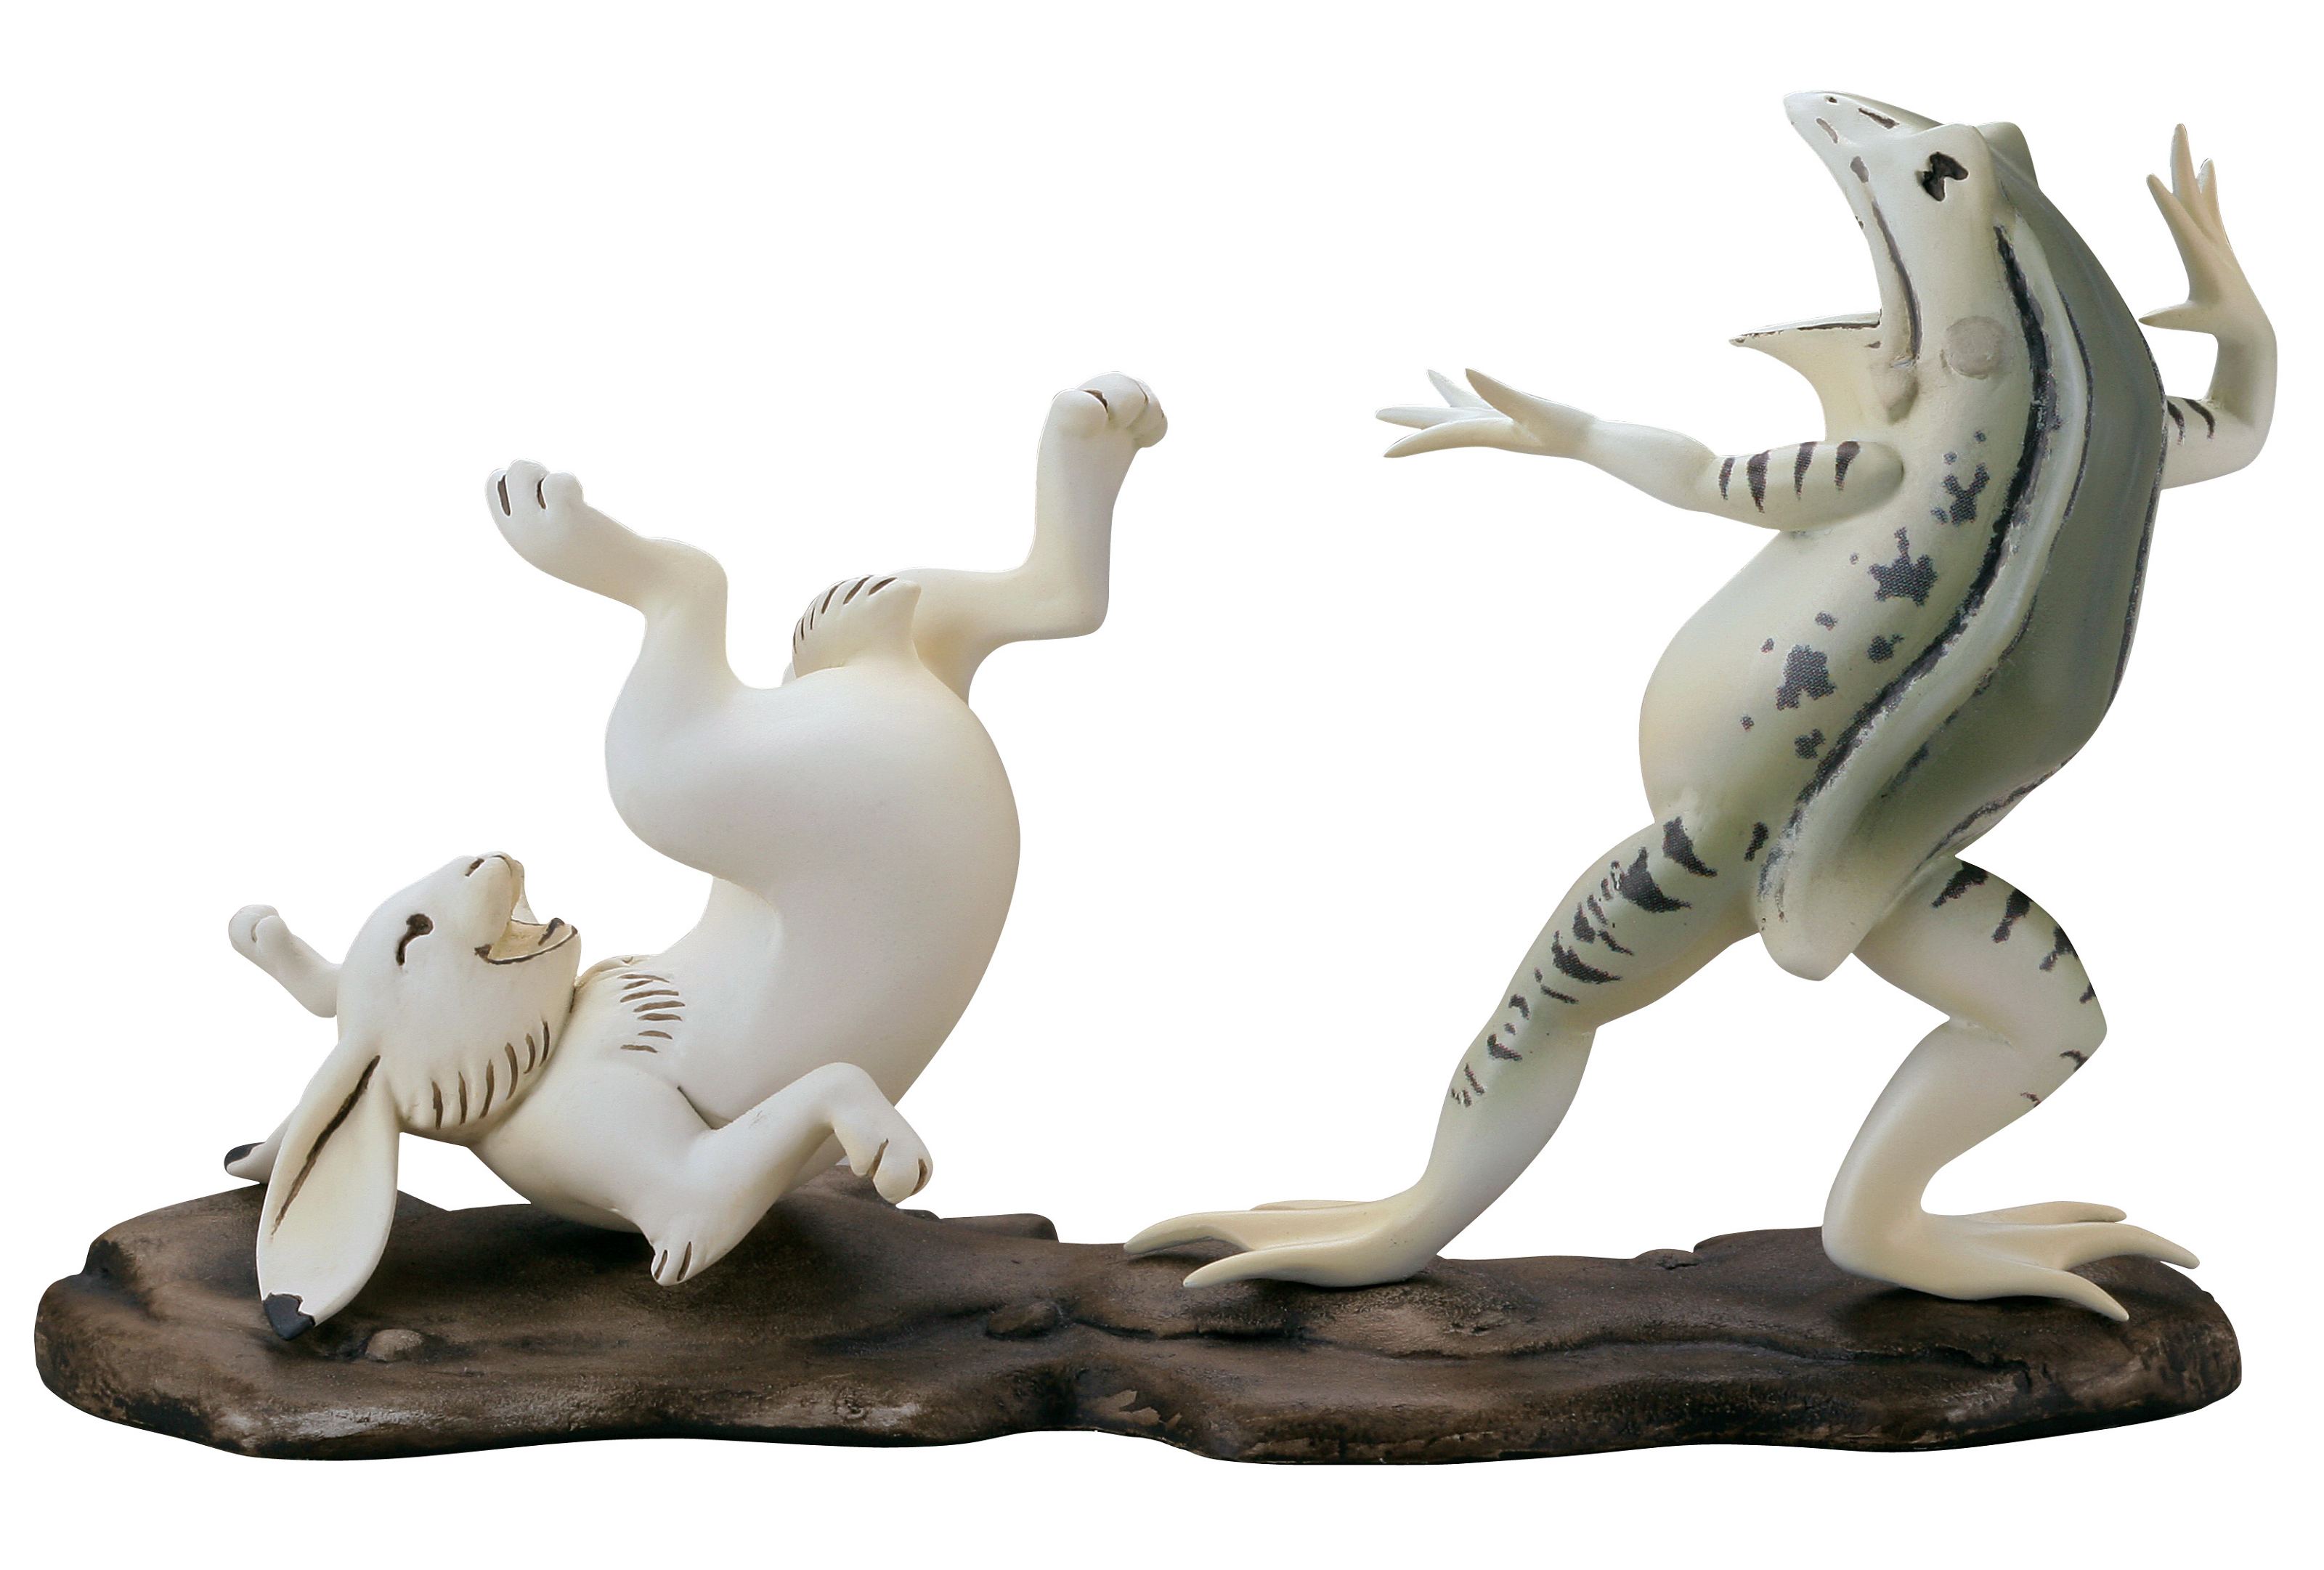 KAIYODO ARTWORK 3D PICTURE BOOK ANIMAL CARICATURES by Kaiyodo